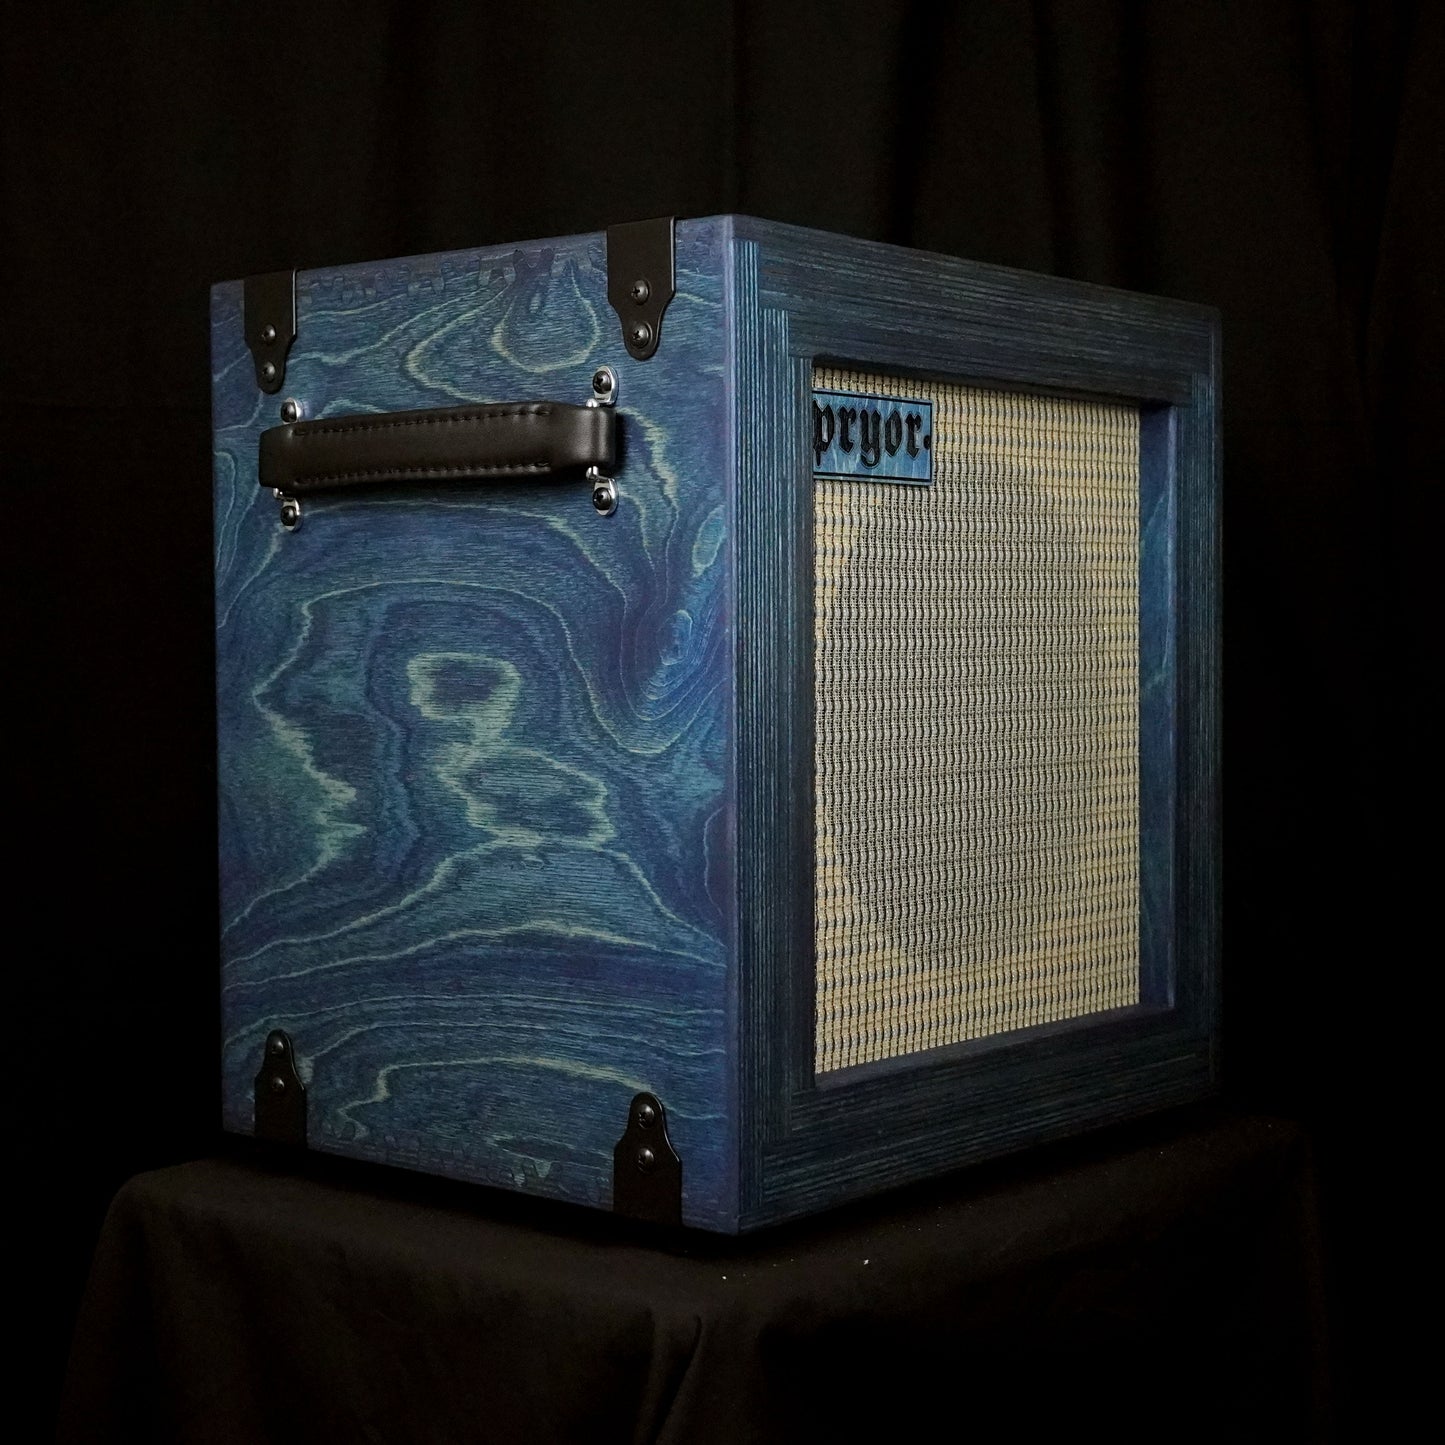 1x10 Guitar Speaker Cabinet